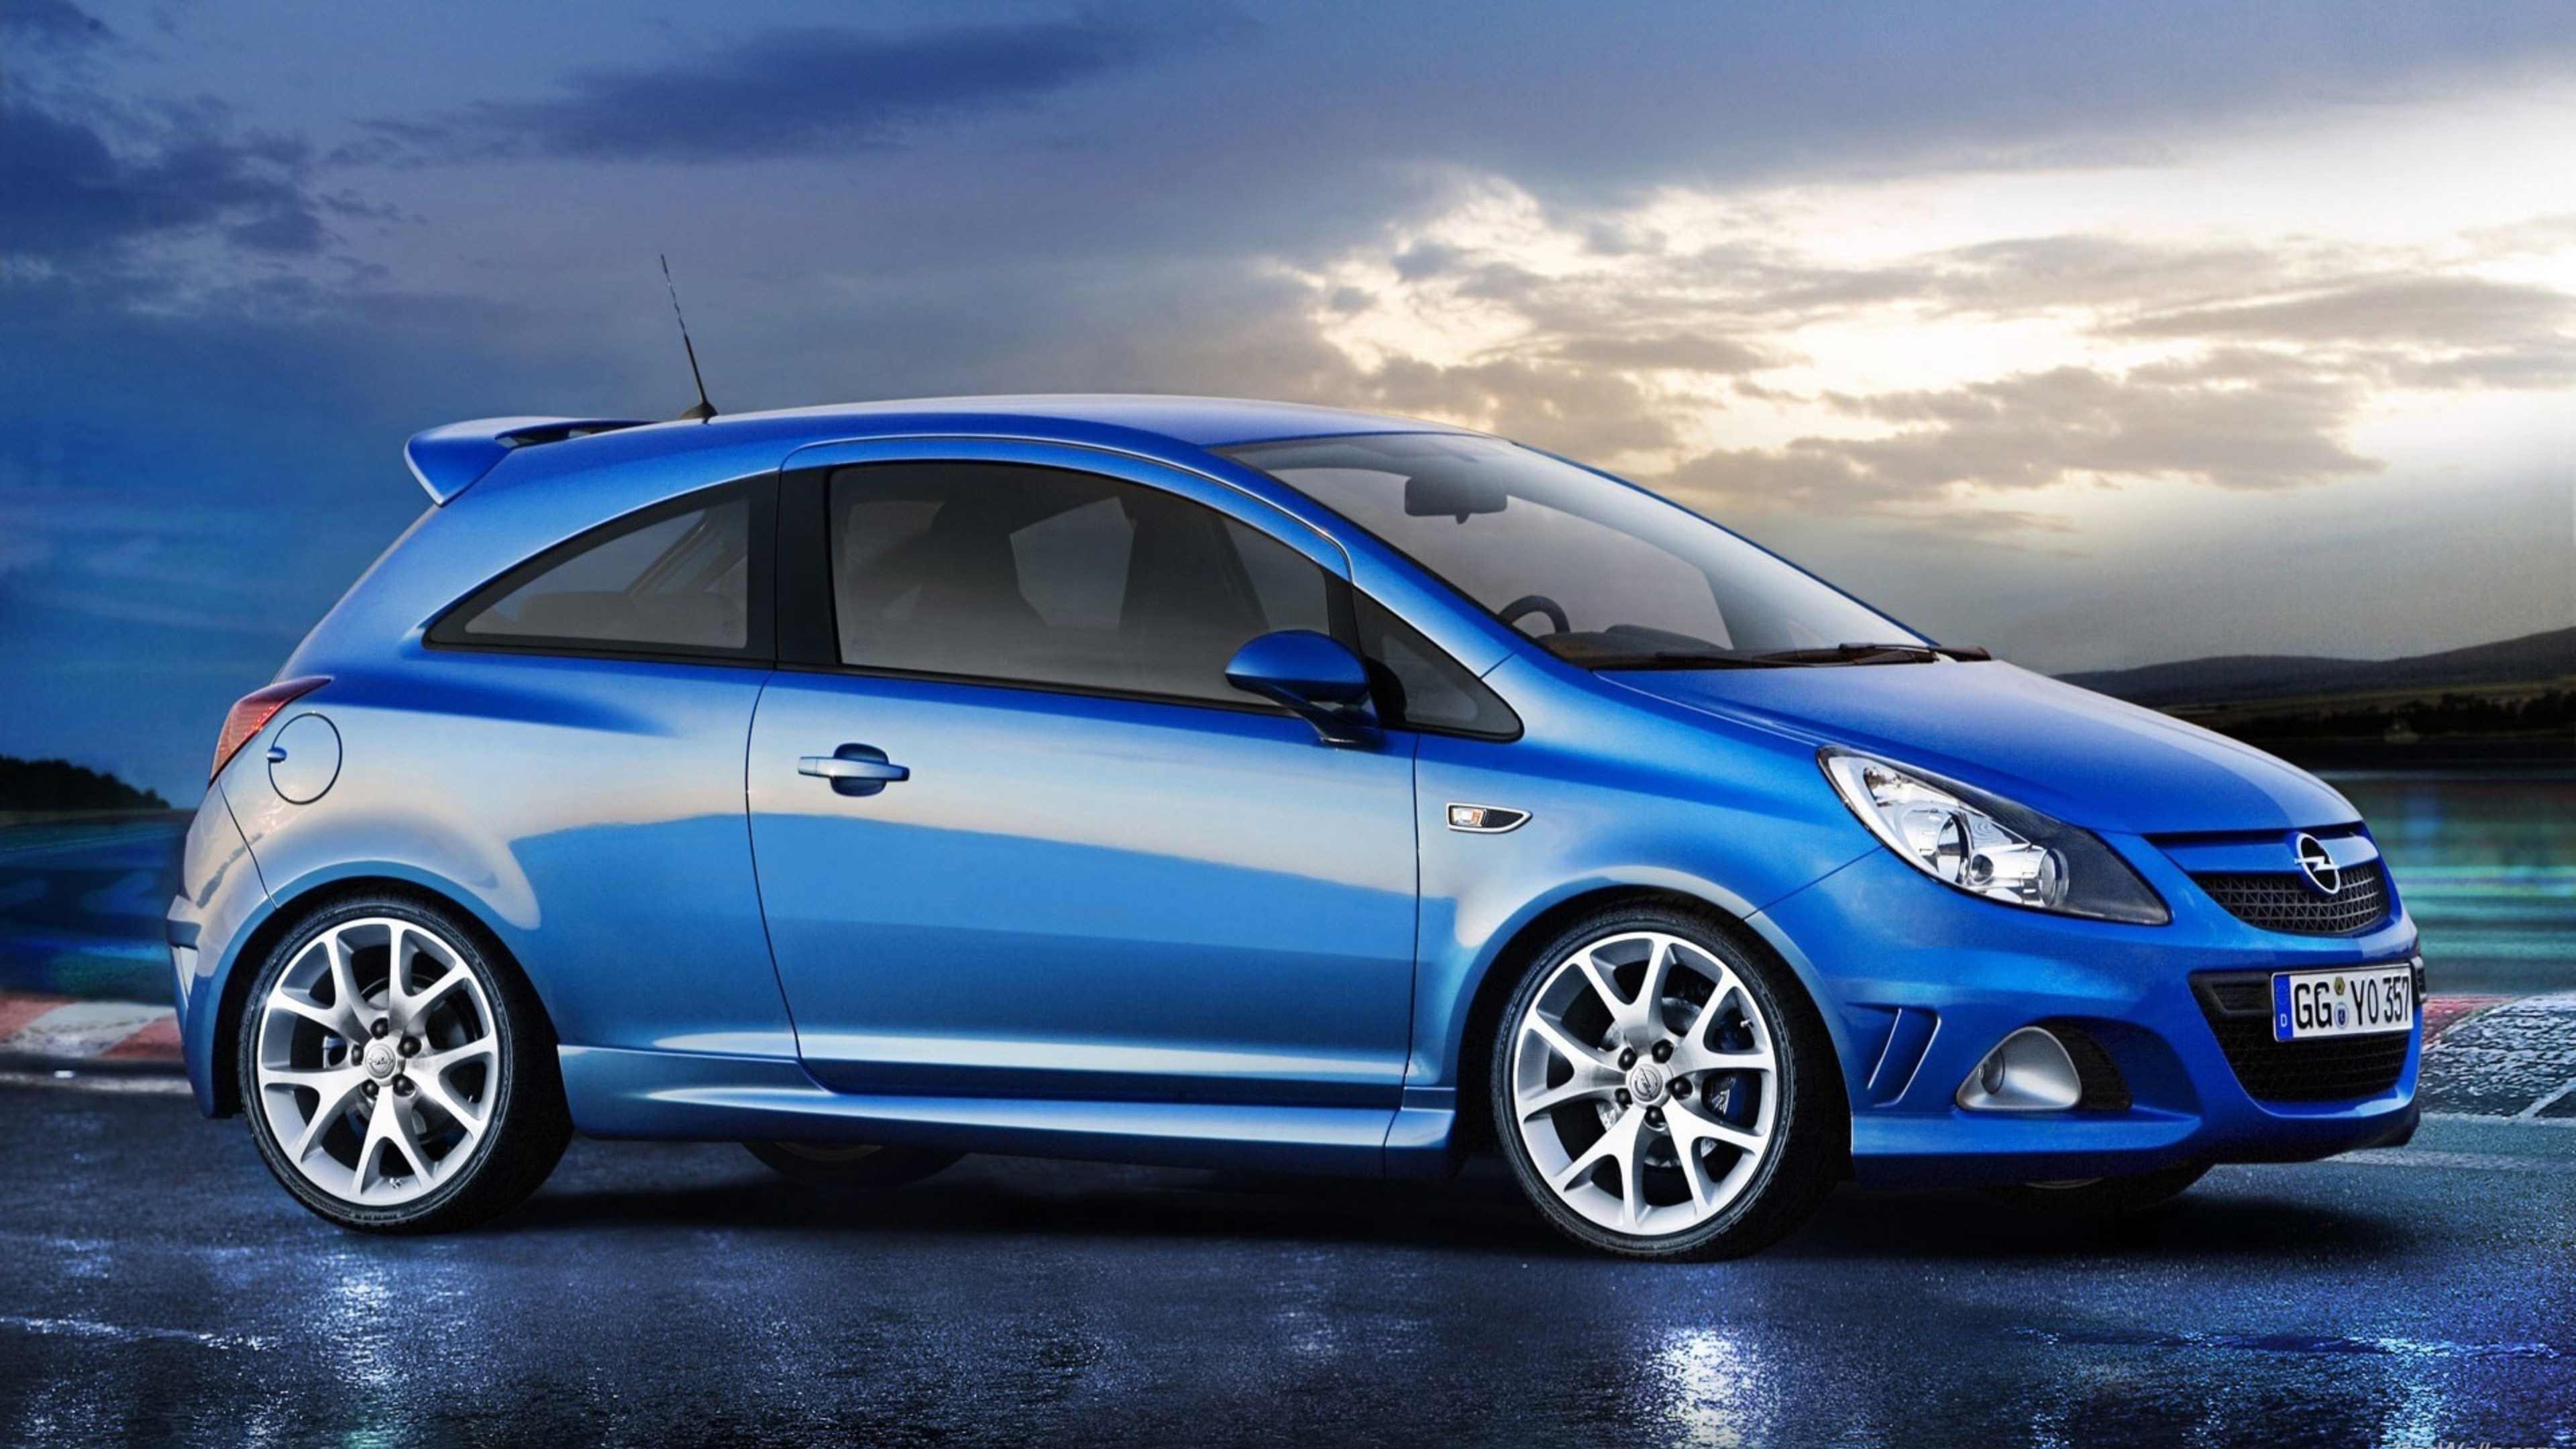 Opel Corsa, Auto performance, Opc model, Hd resolution, 3840x2160 4K Desktop